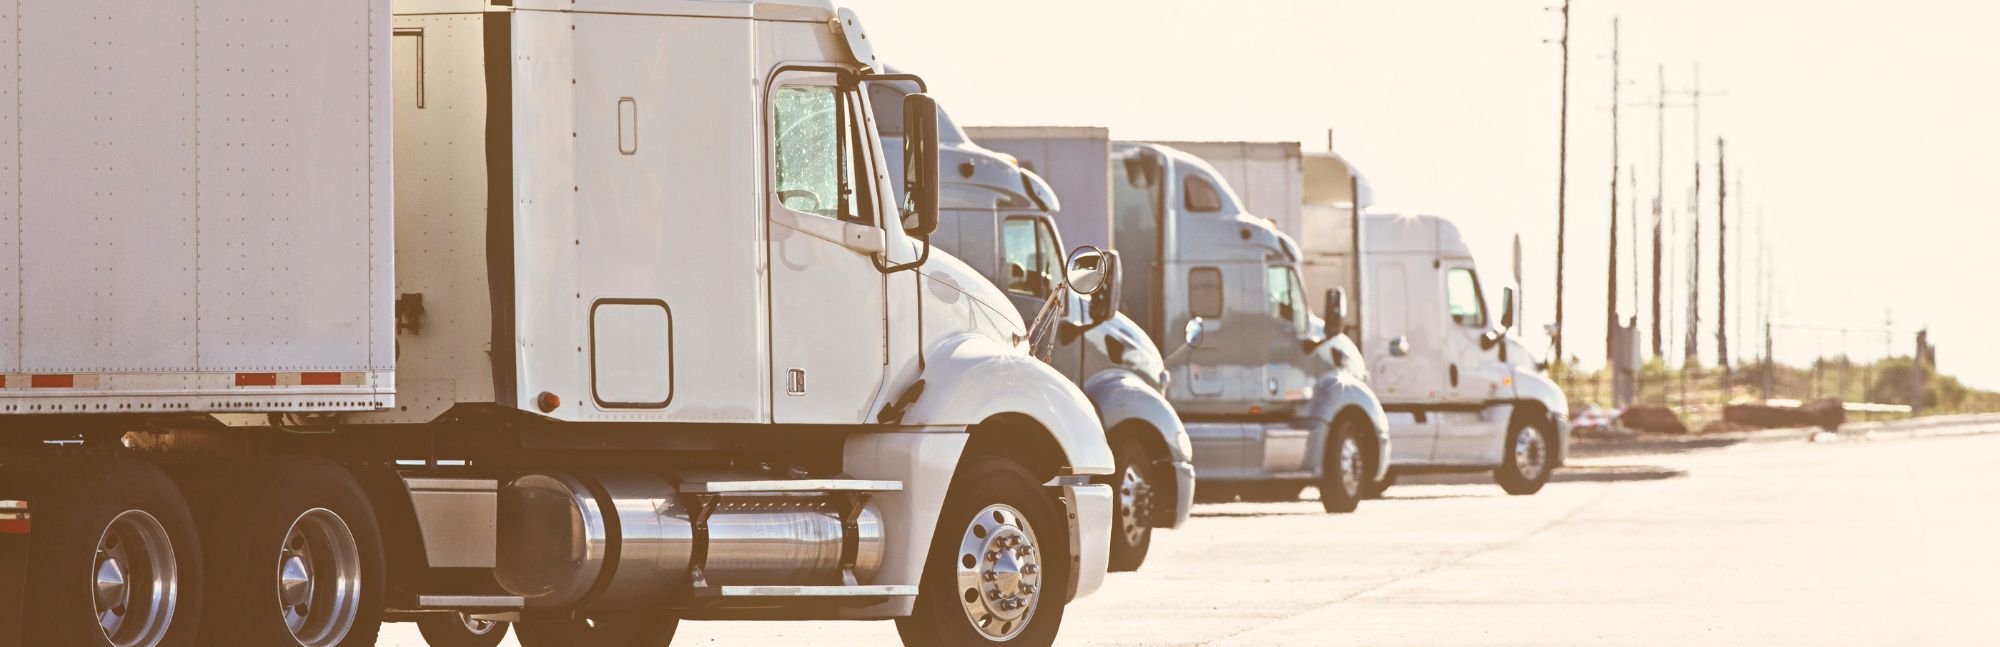 choosing a trucking company cross border shipping ecommerce canada us tariff